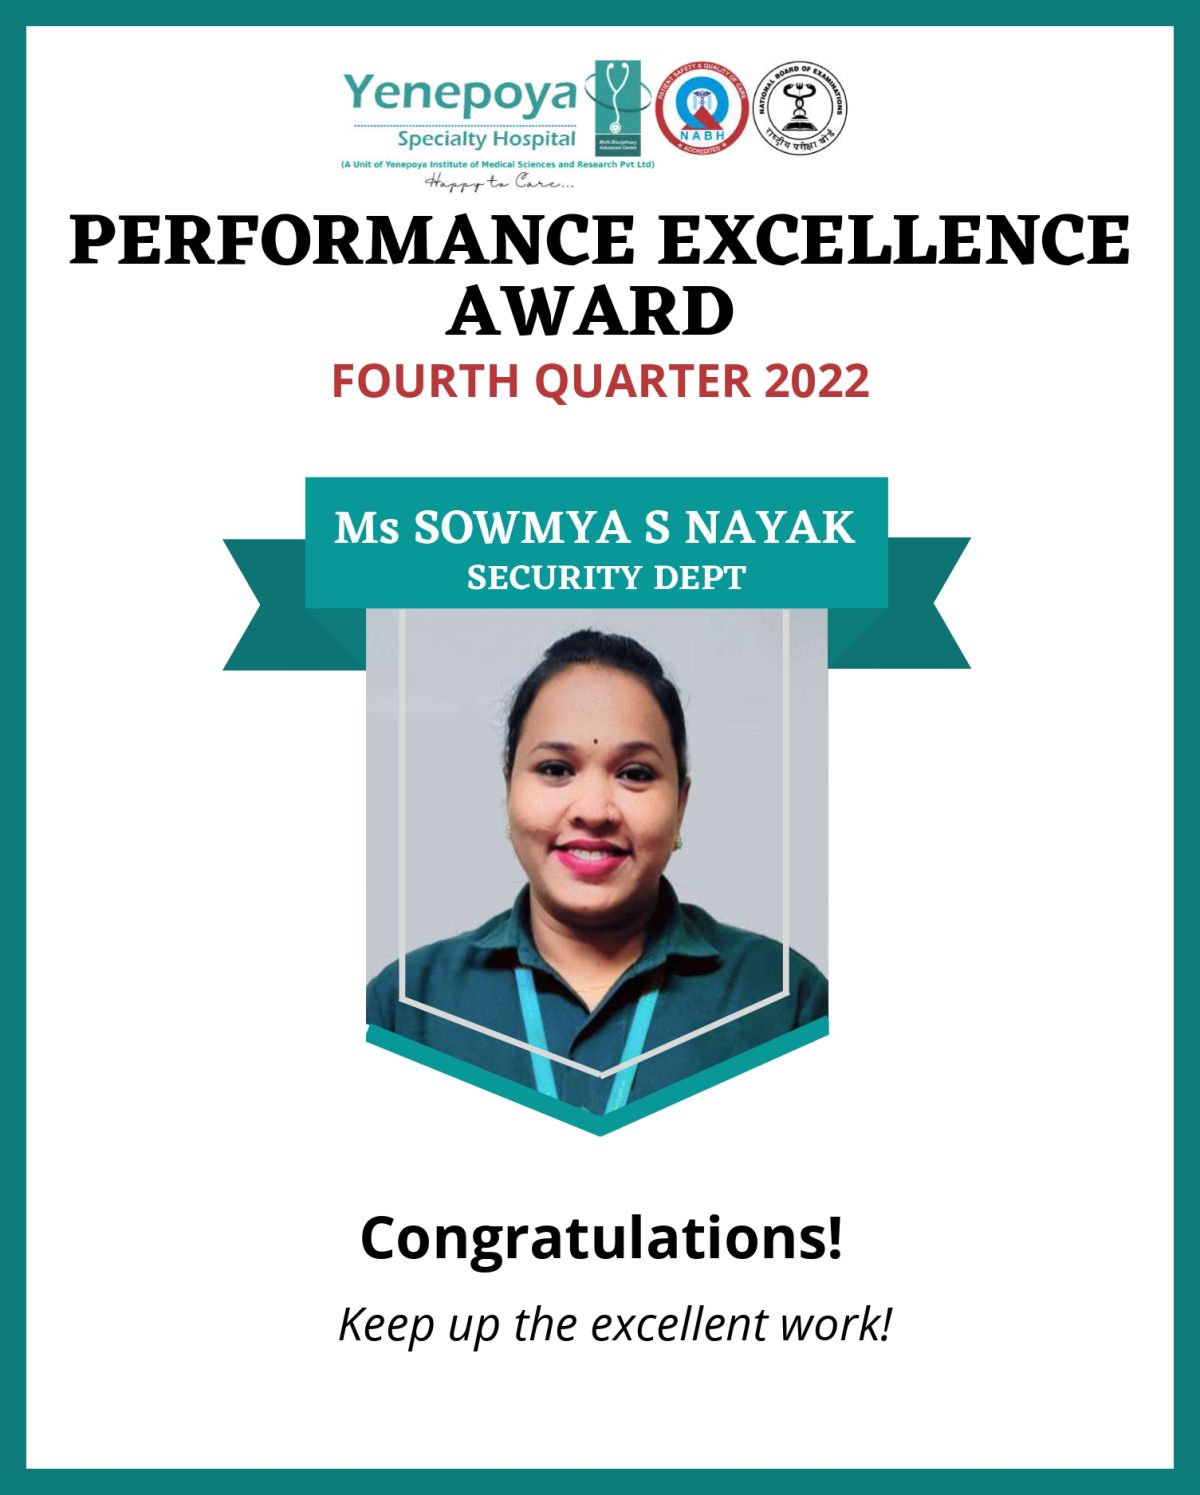 Performance Excellence Award - QUARTER 4, 2022